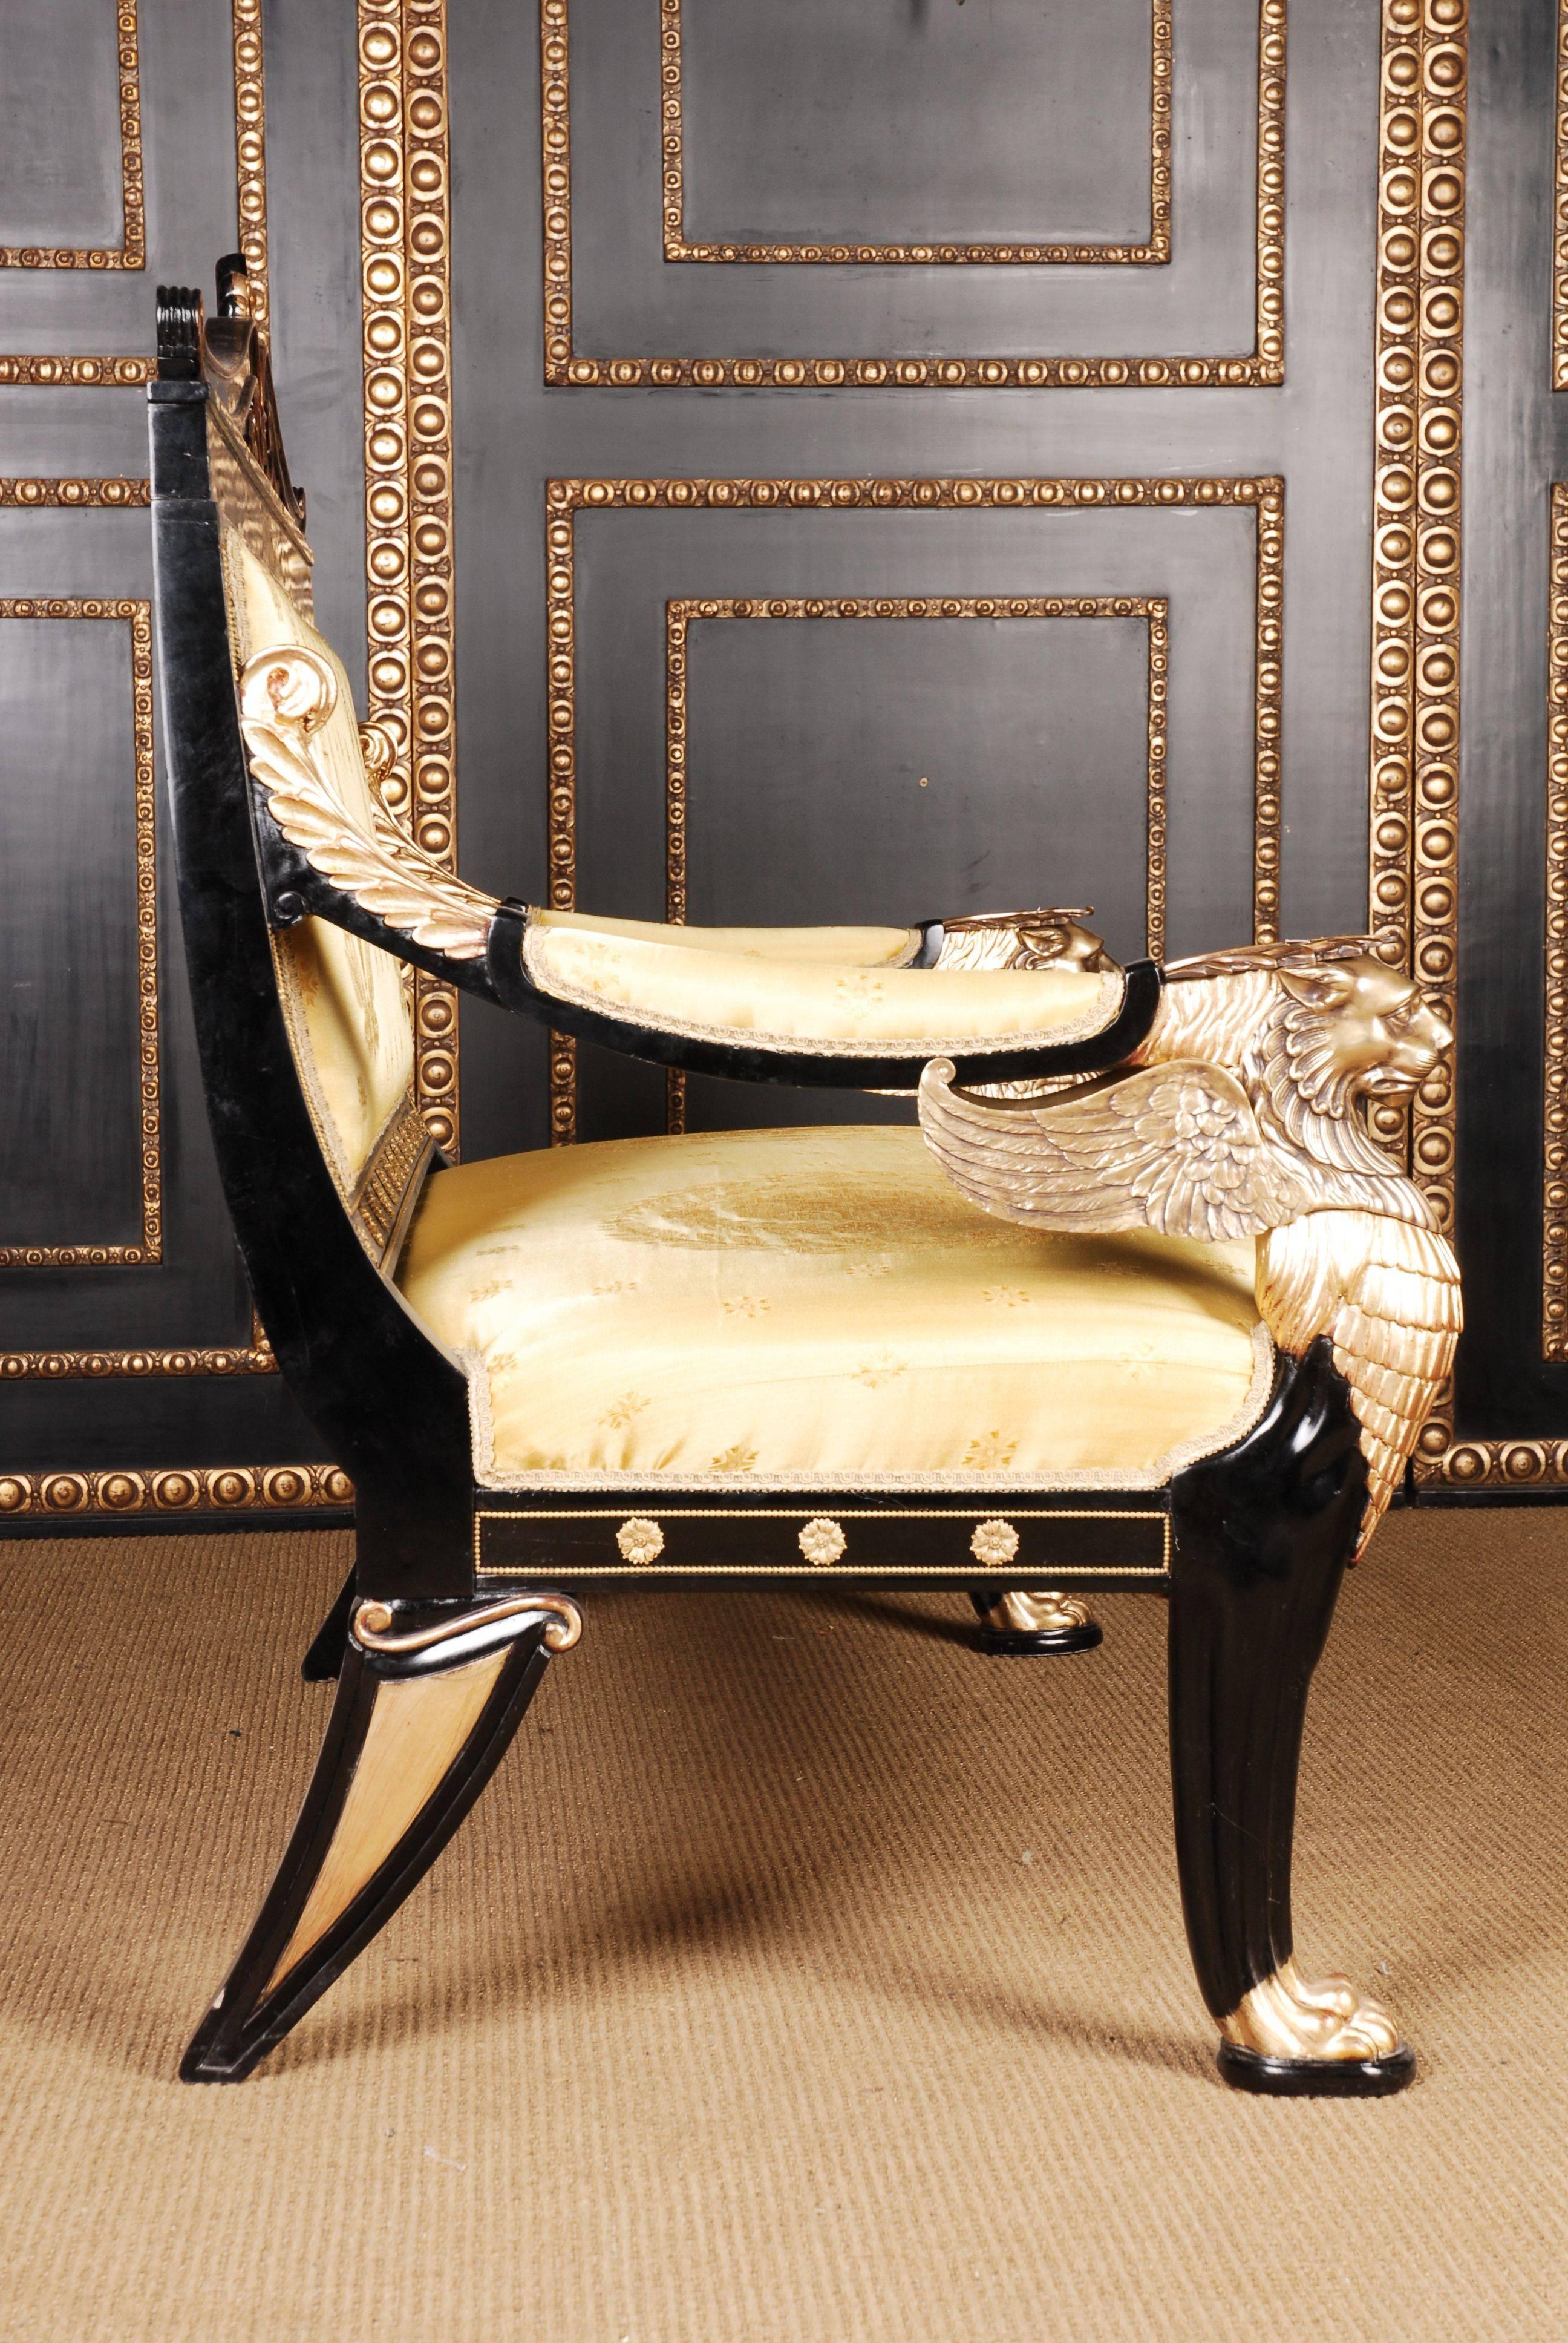 20th Century Empire Style Lion Kanapee Sofa In Good Condition For Sale In Berlin, DE